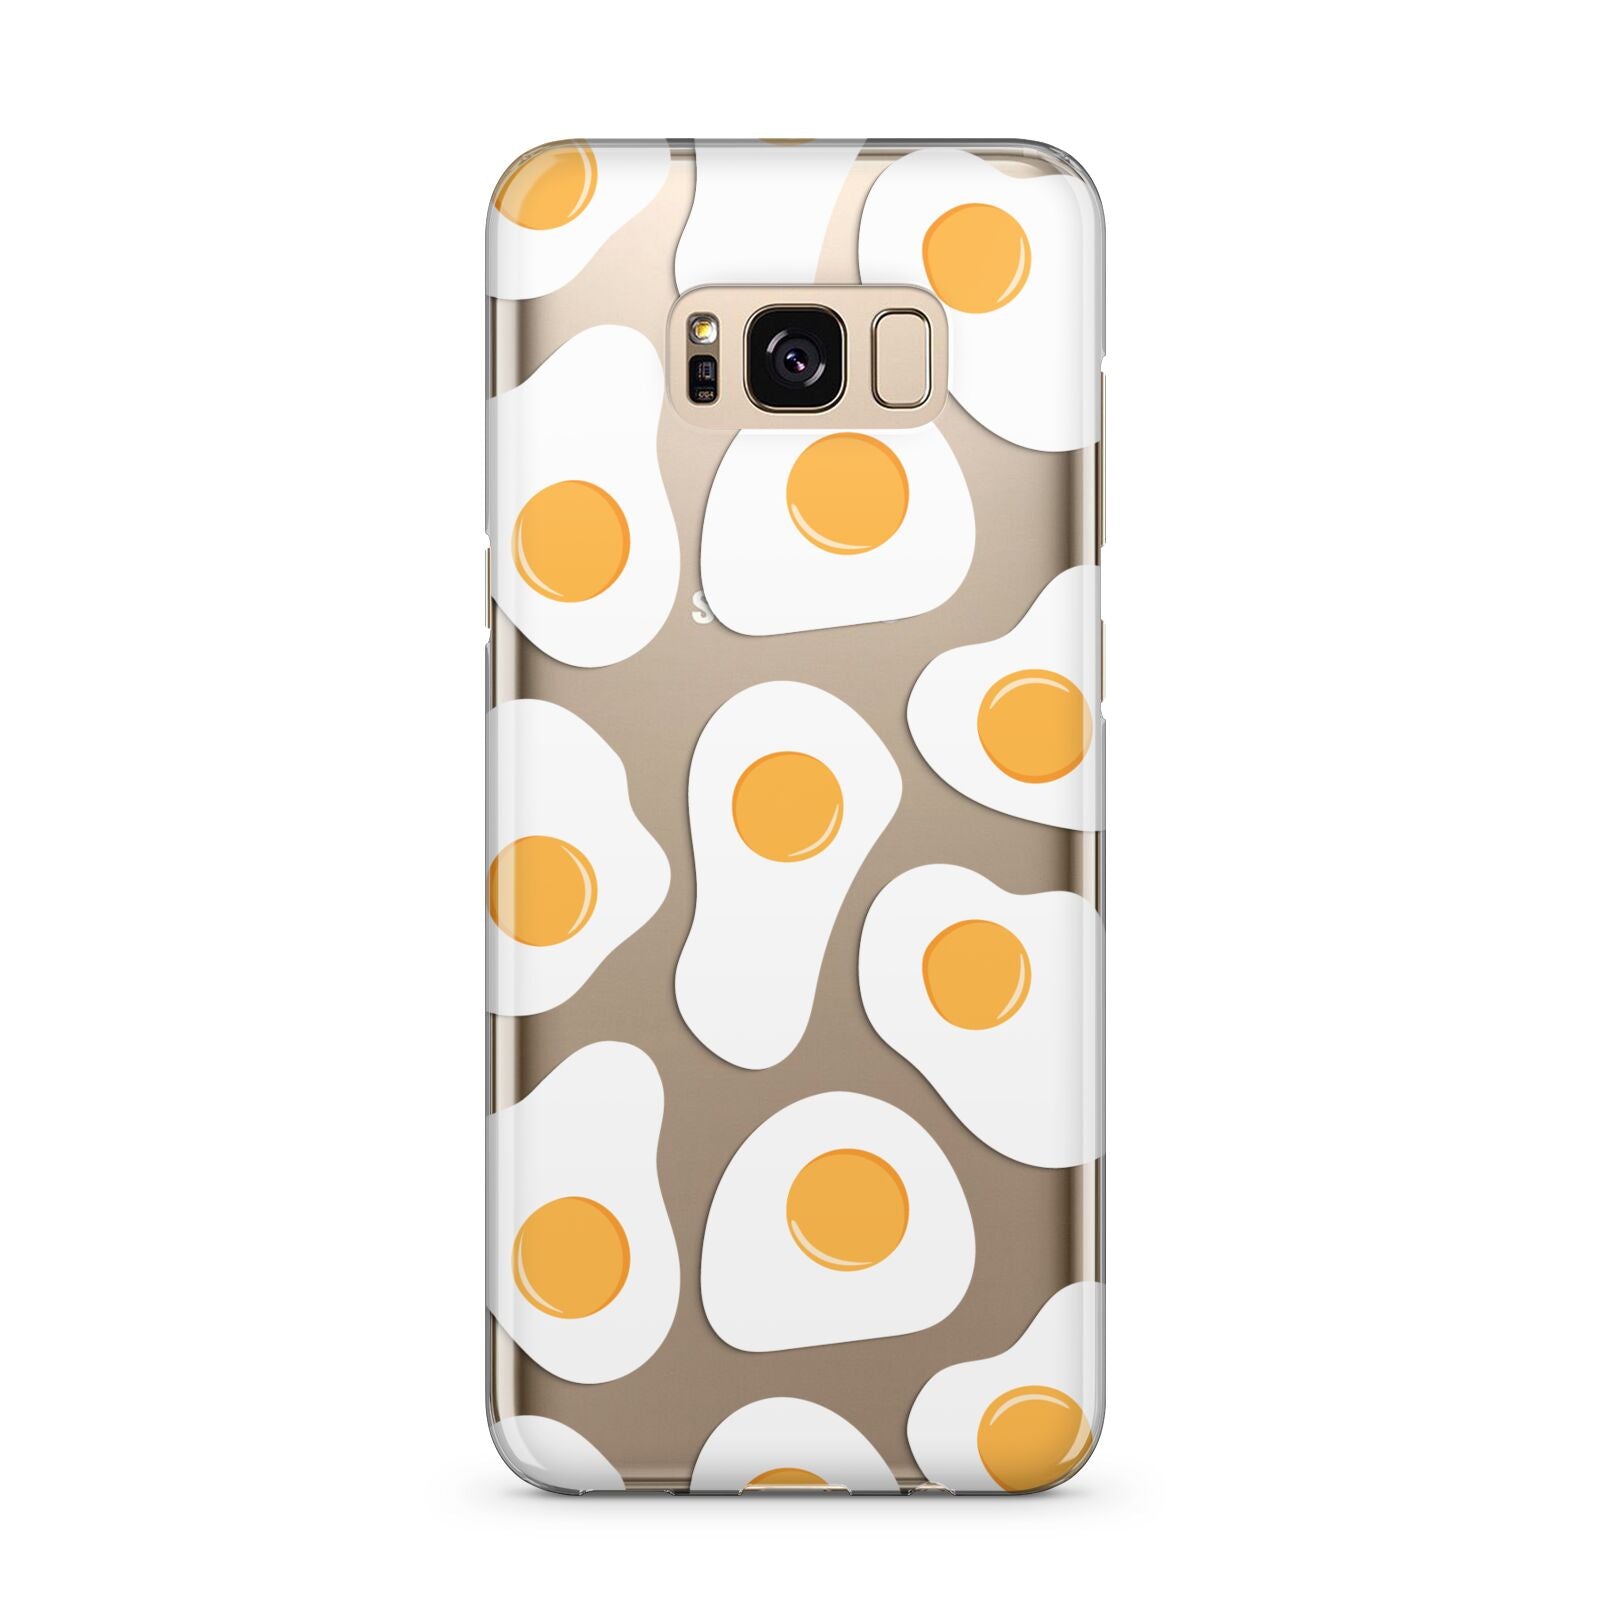 Fried Egg Samsung Galaxy S8 Plus Case